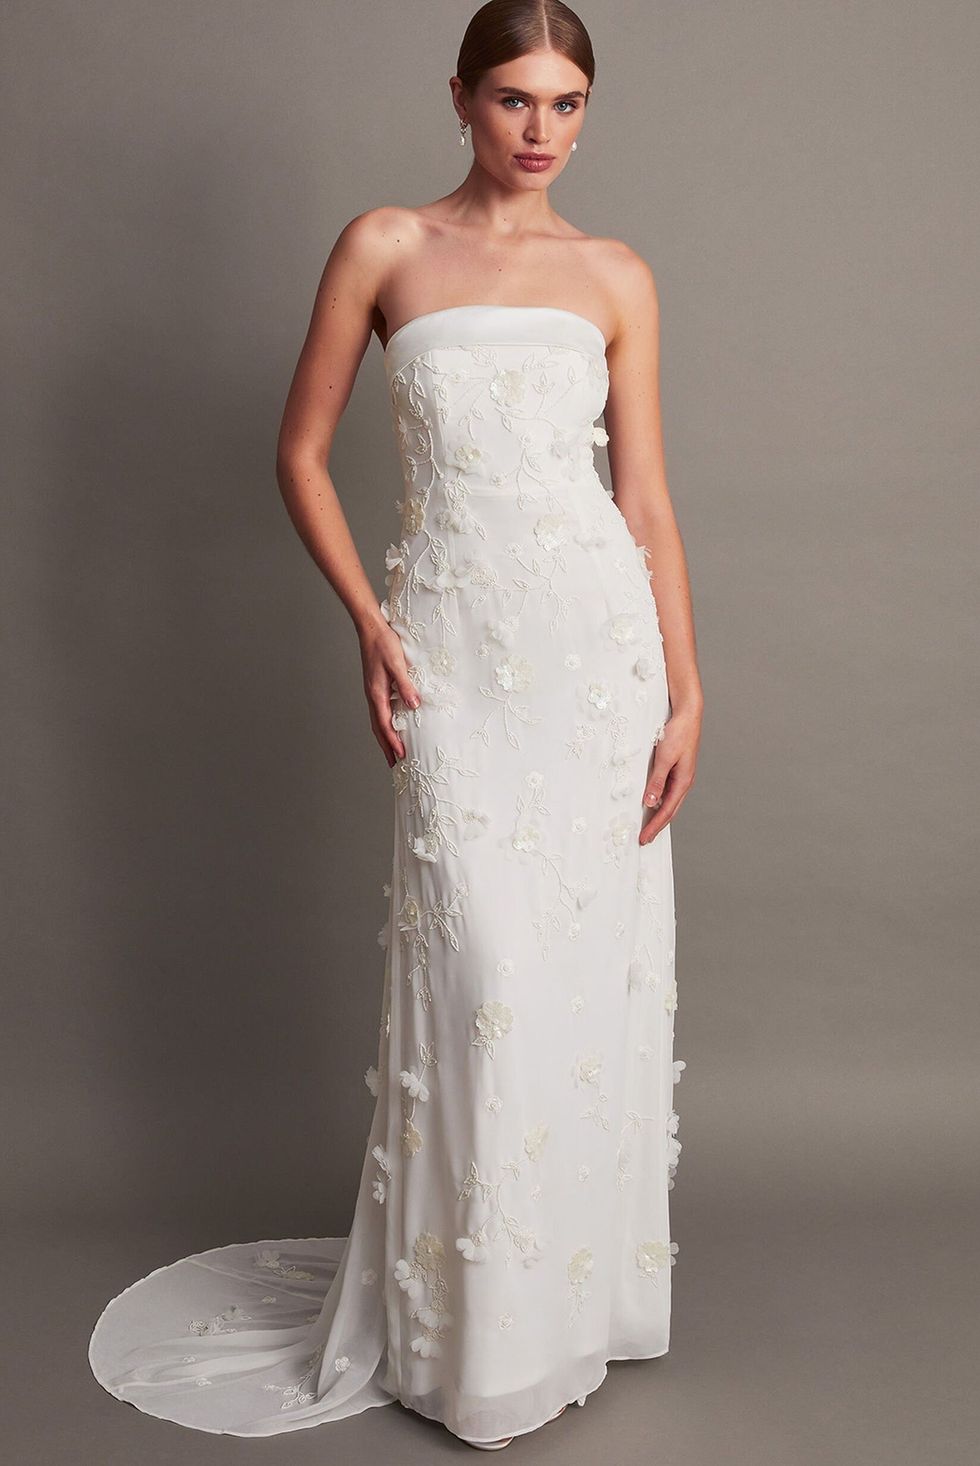 Eve embellished bridal dress ivory